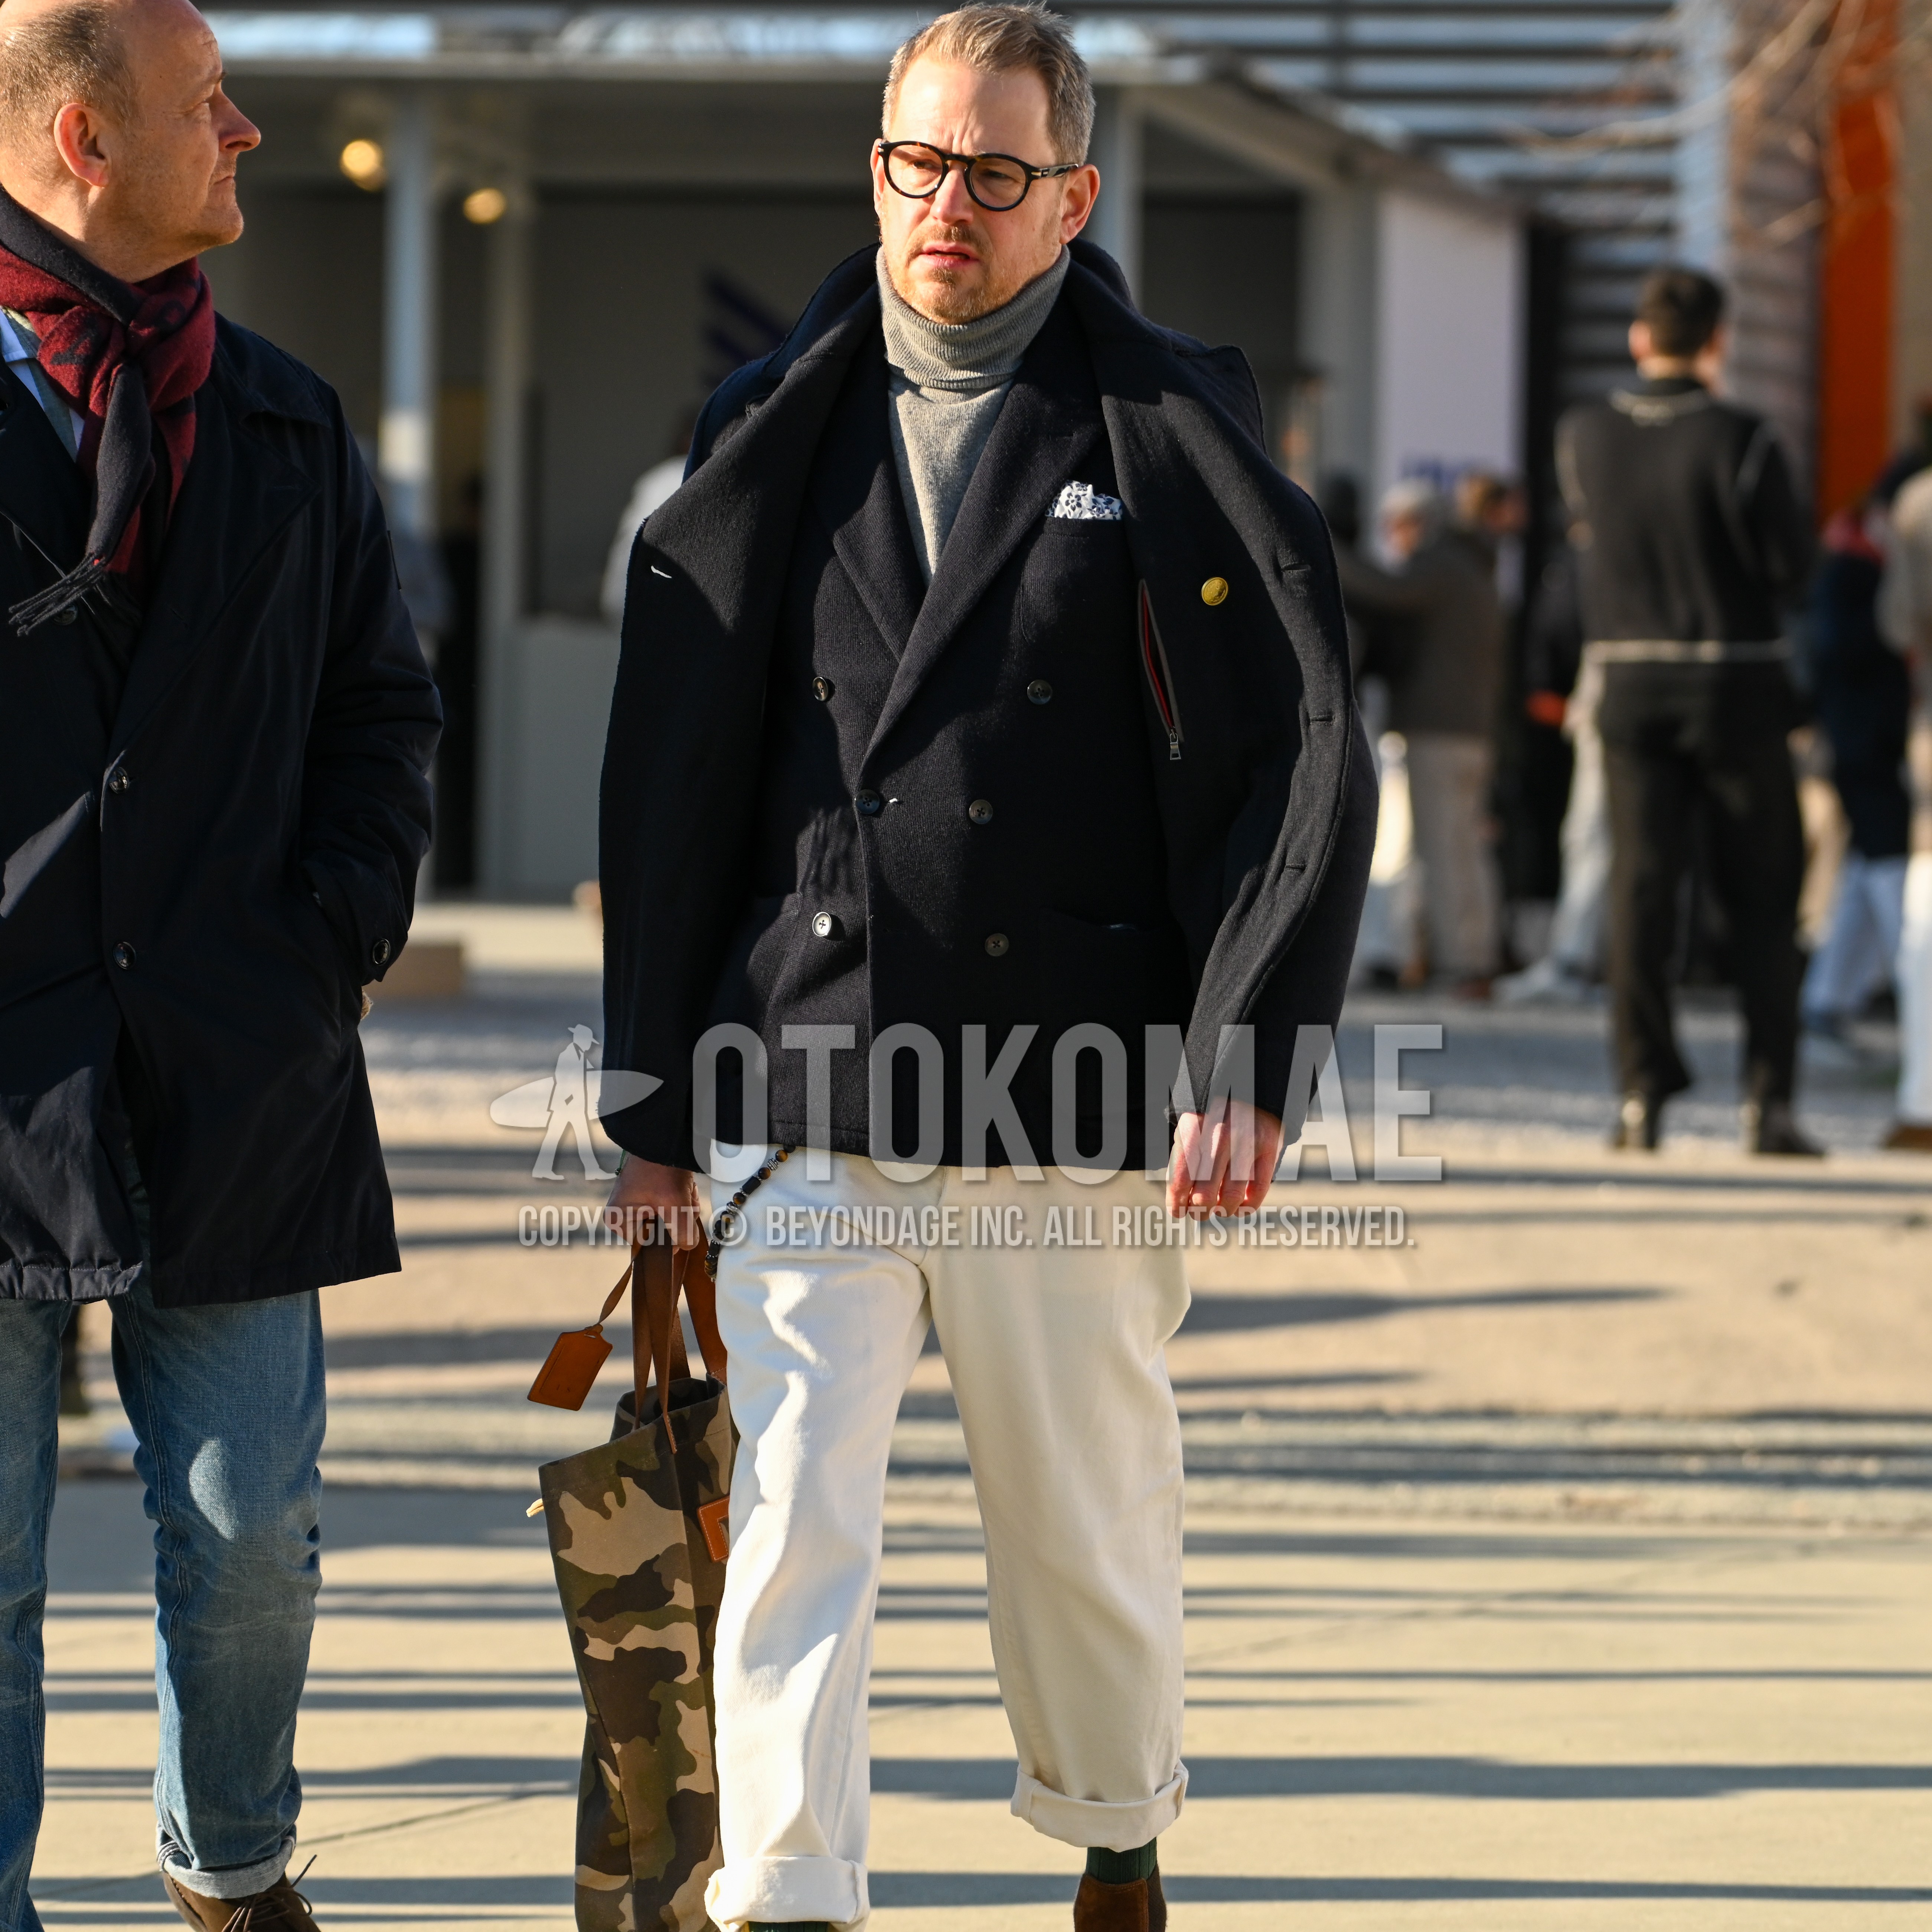 Men's autumn winter outfit with tortoiseshell glasses, black plain p coat, gray plain turtleneck knit, white plain cotton pants, camouflage tote bag.